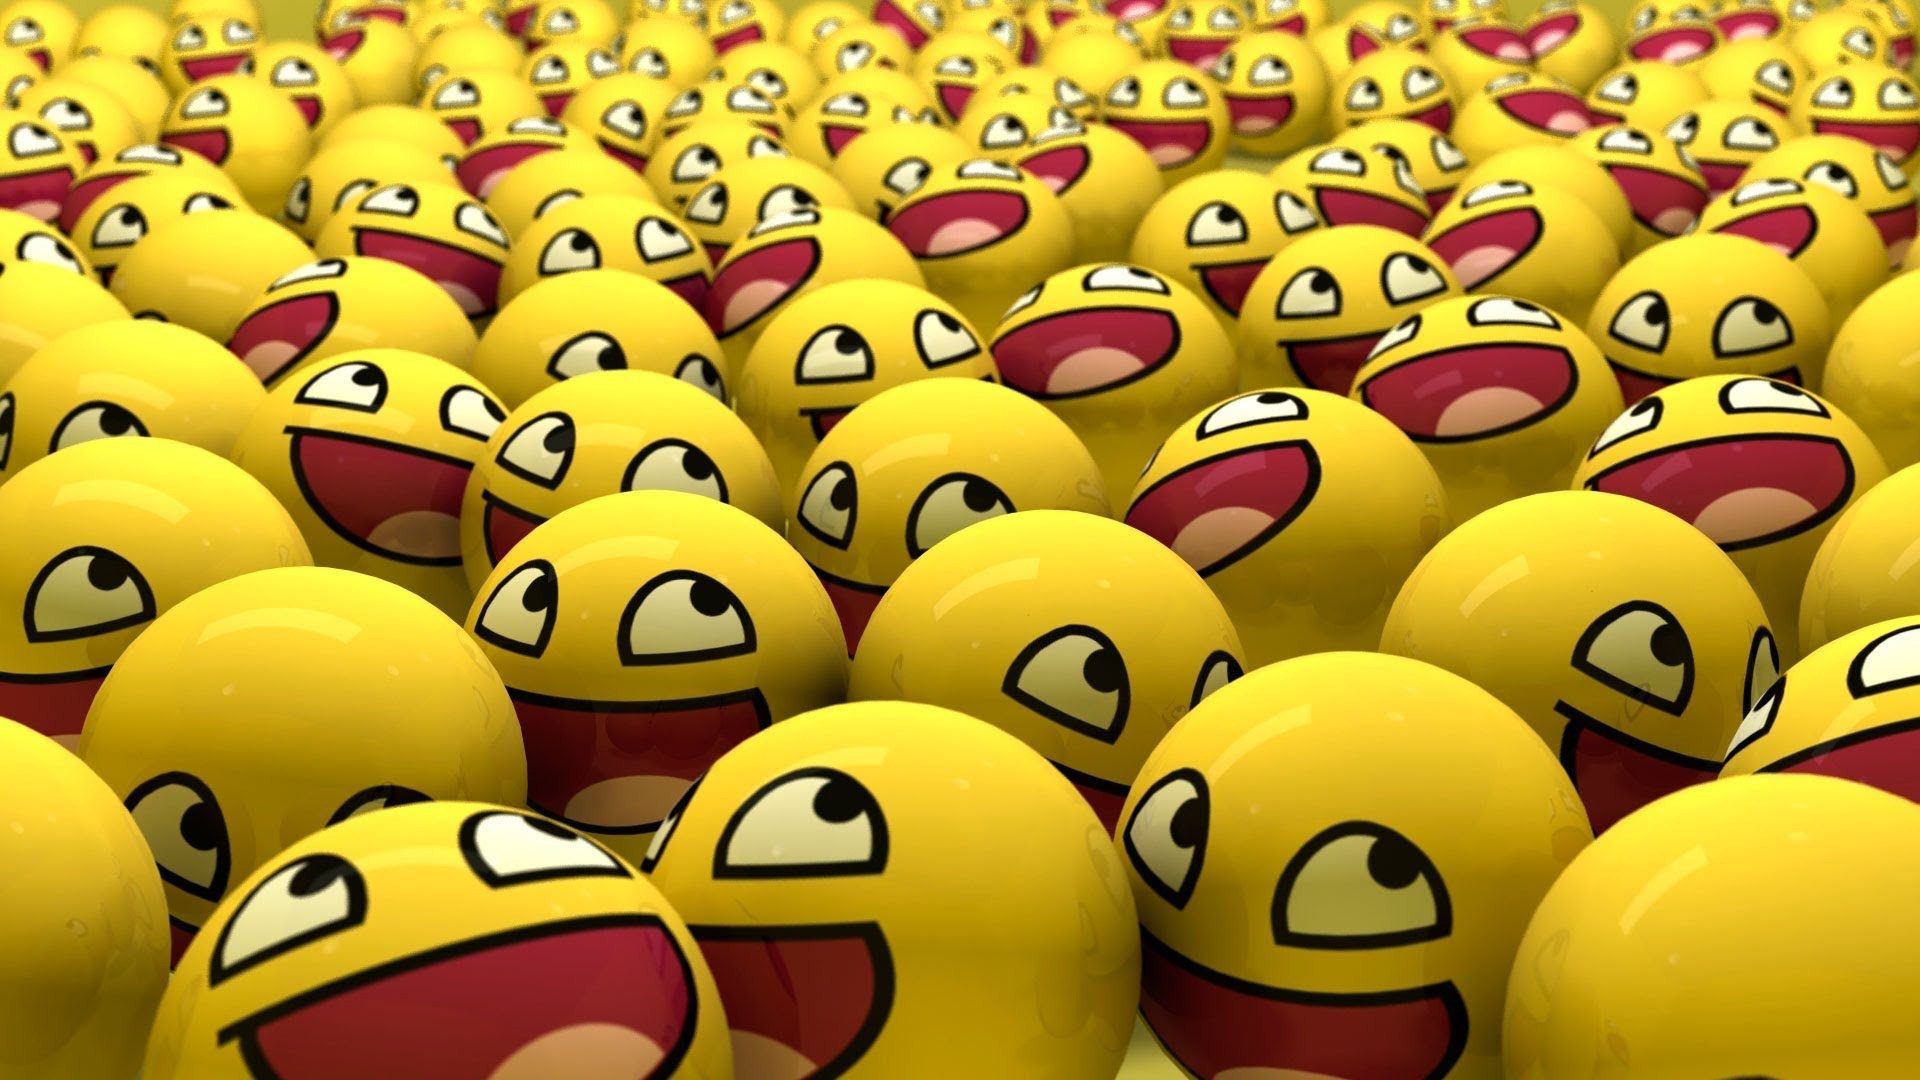 Faces Funny Wallpaper For Desktop Of Smiley